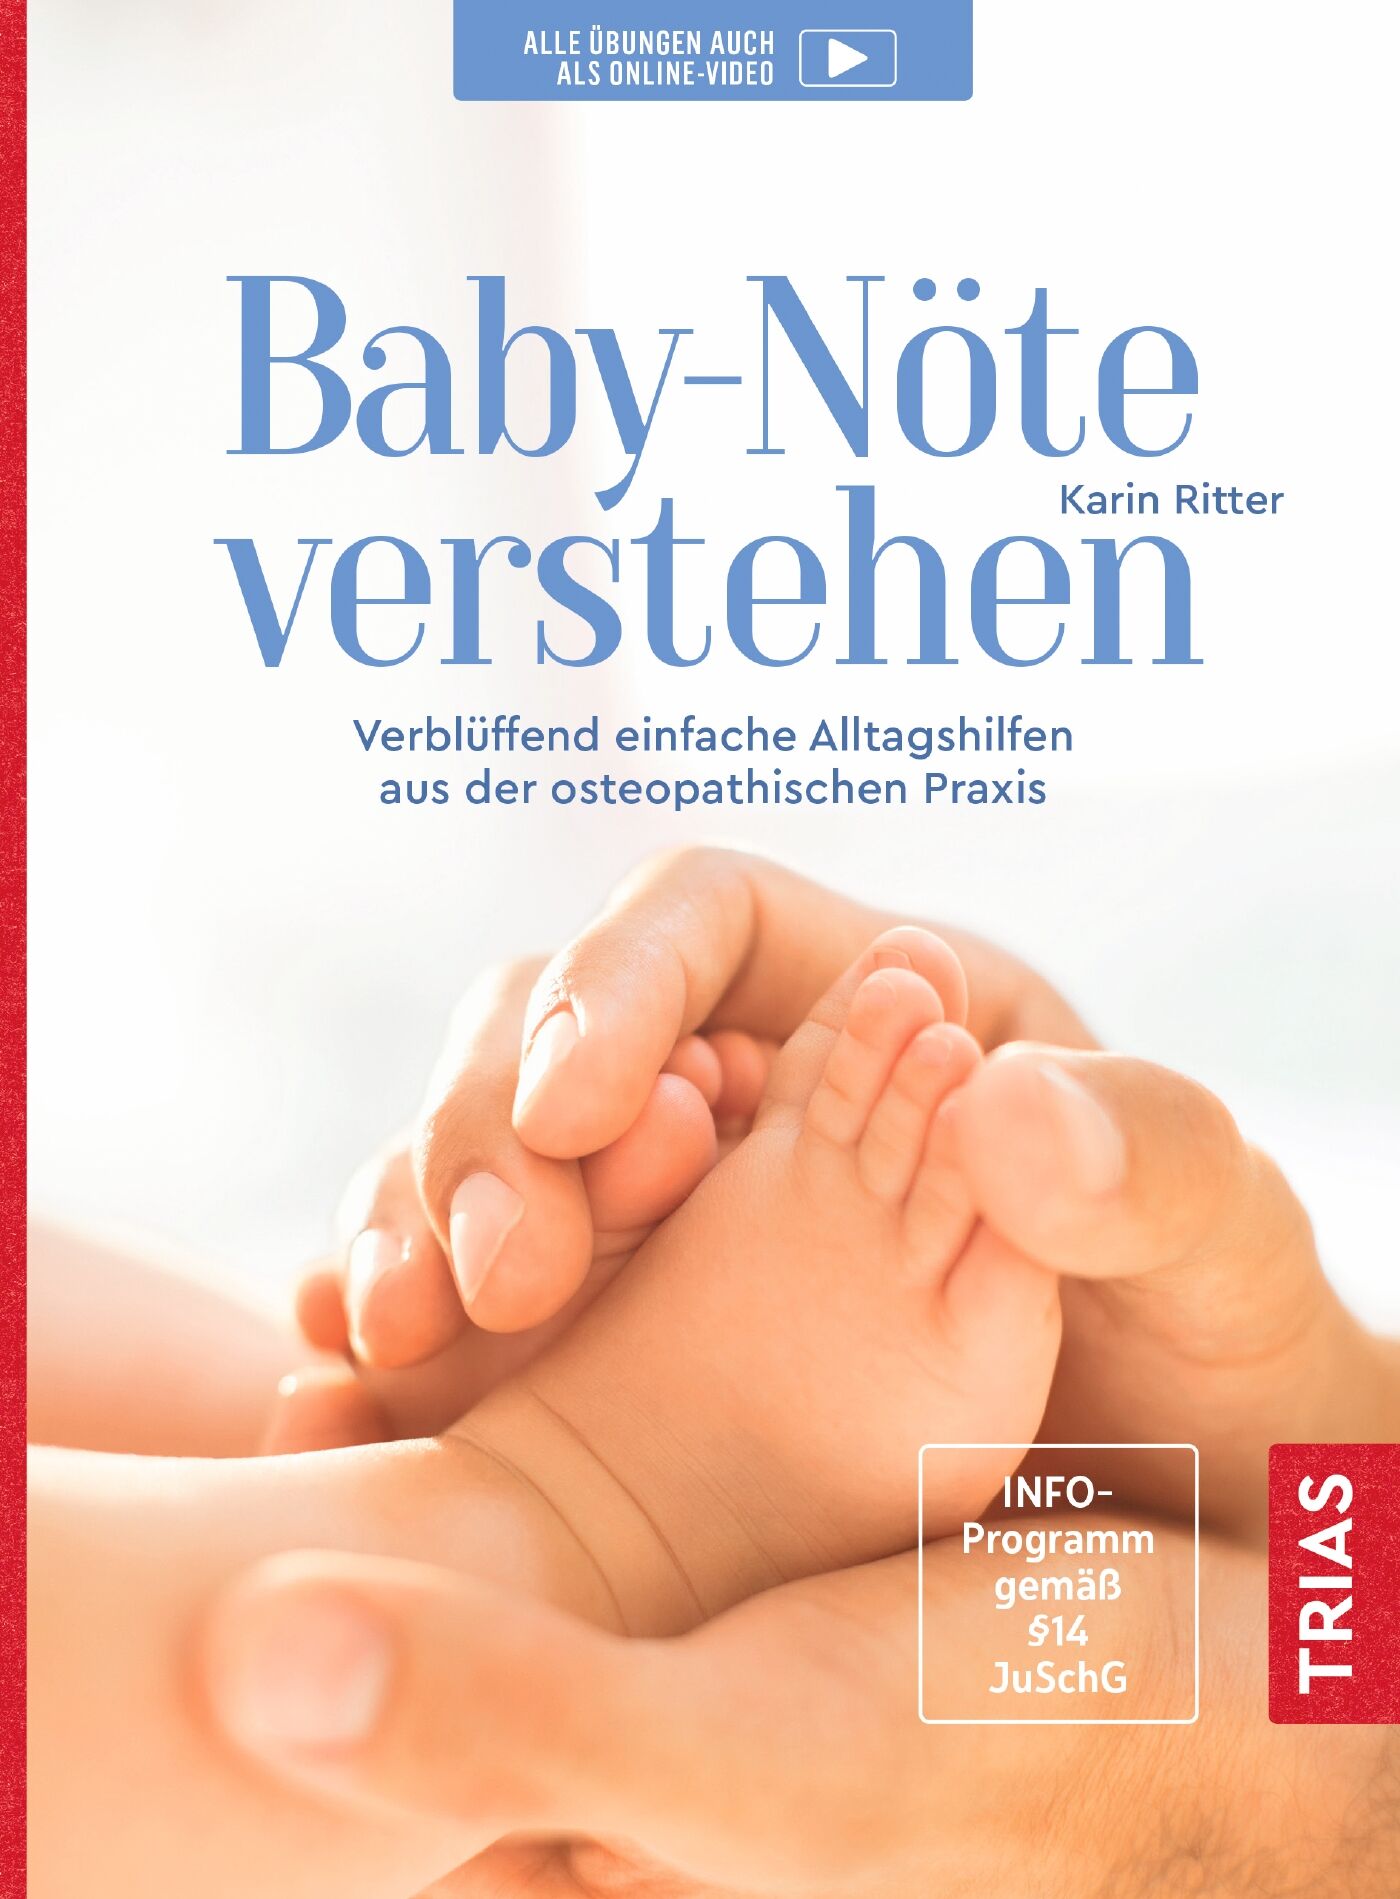 Baby-Nöte verstehen, 9783432110943